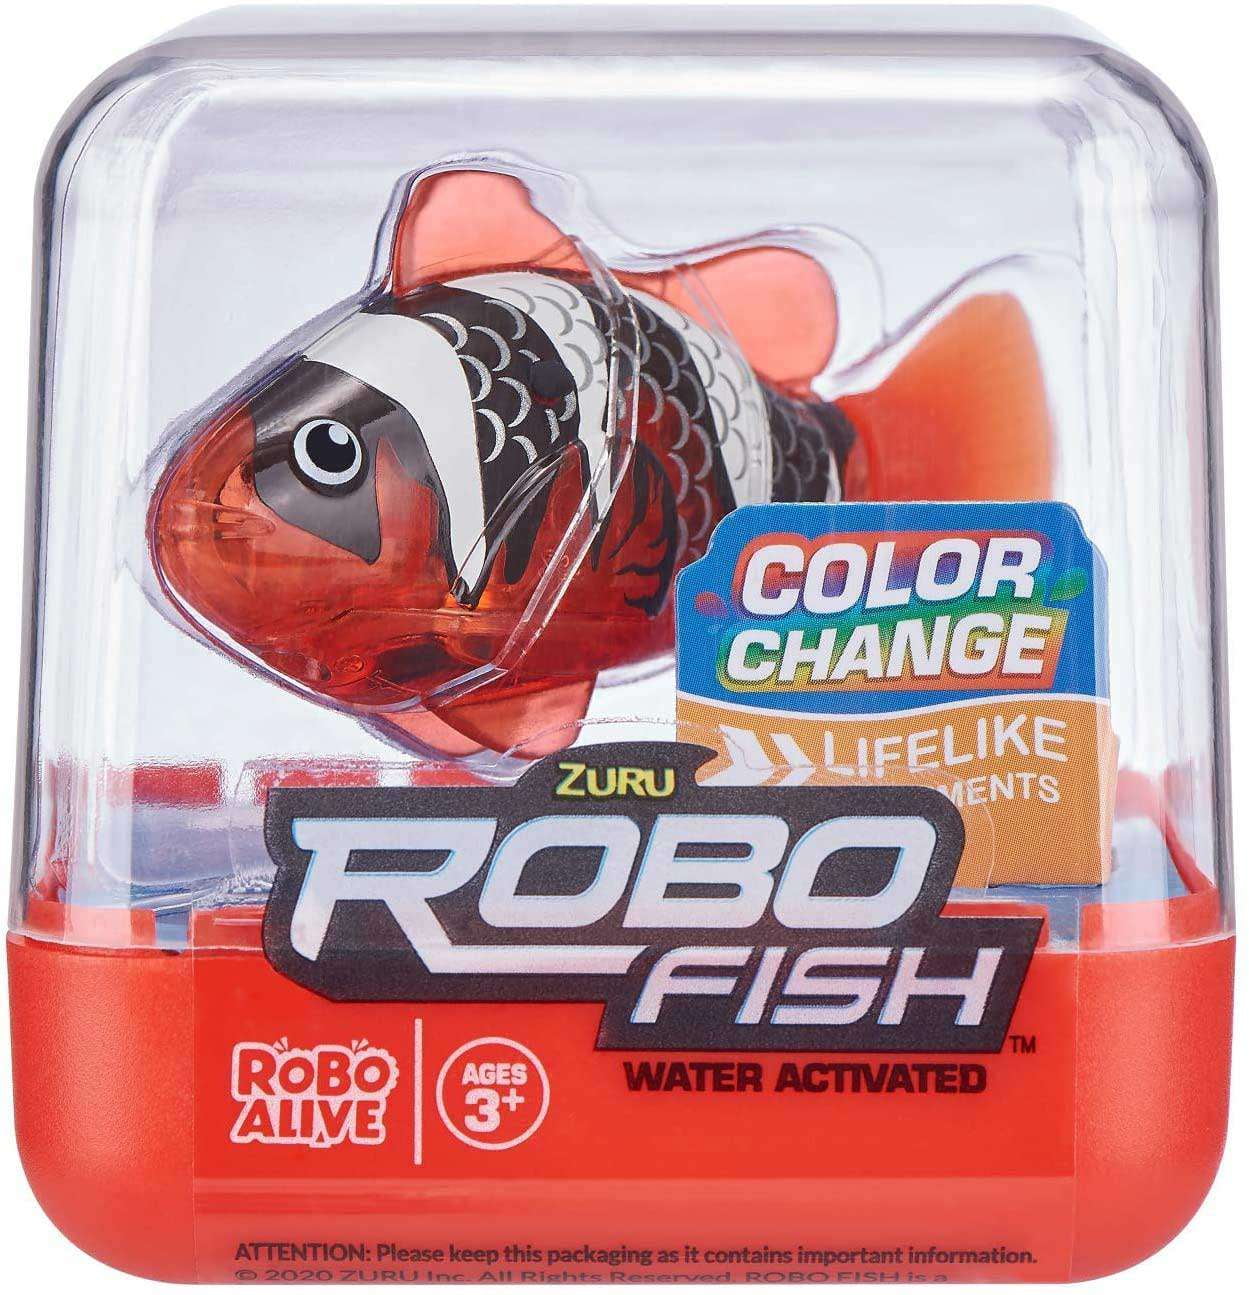 Zuru Robo Alive Robo Fish Changes Color Robotic Swimming Fish